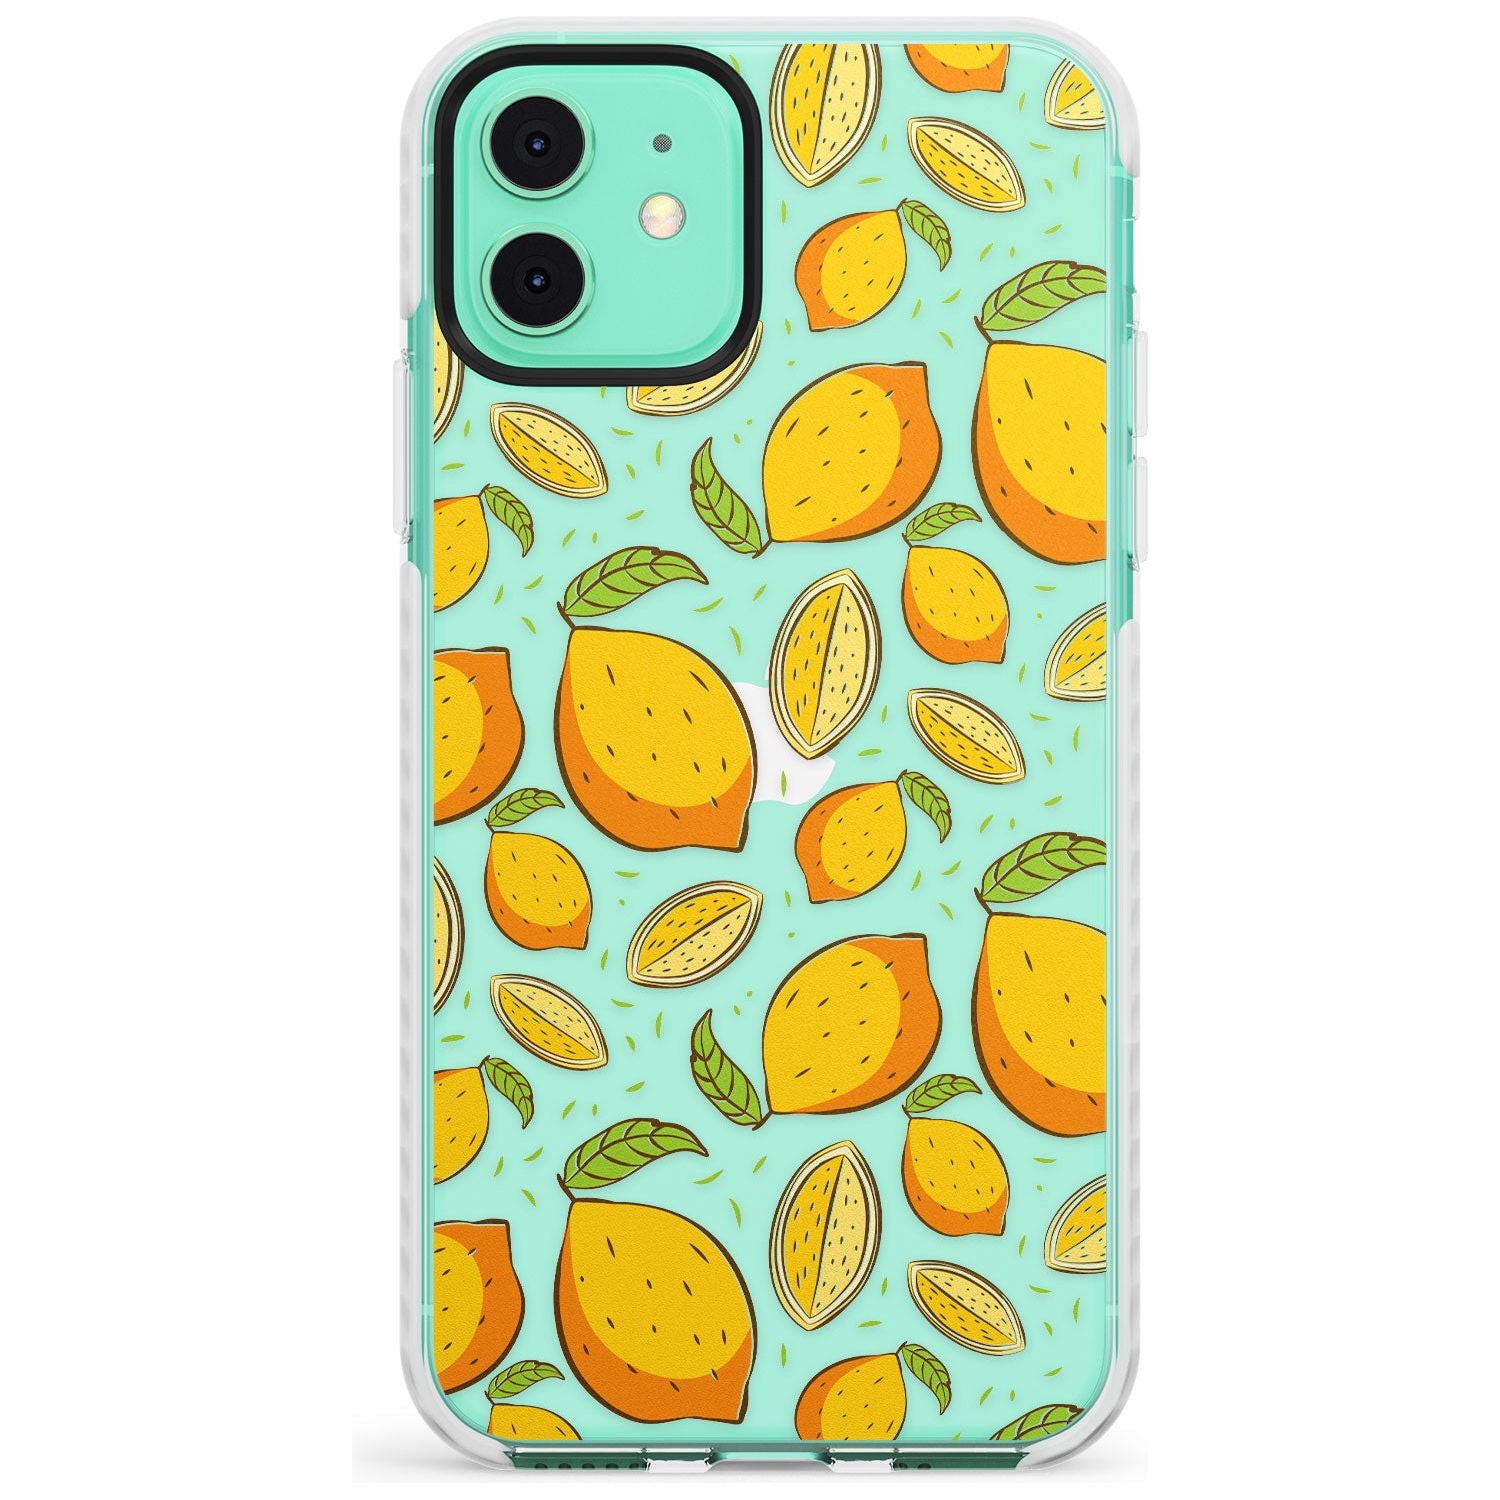 Lemon Pattern Impact Phone Case for iPhone 11